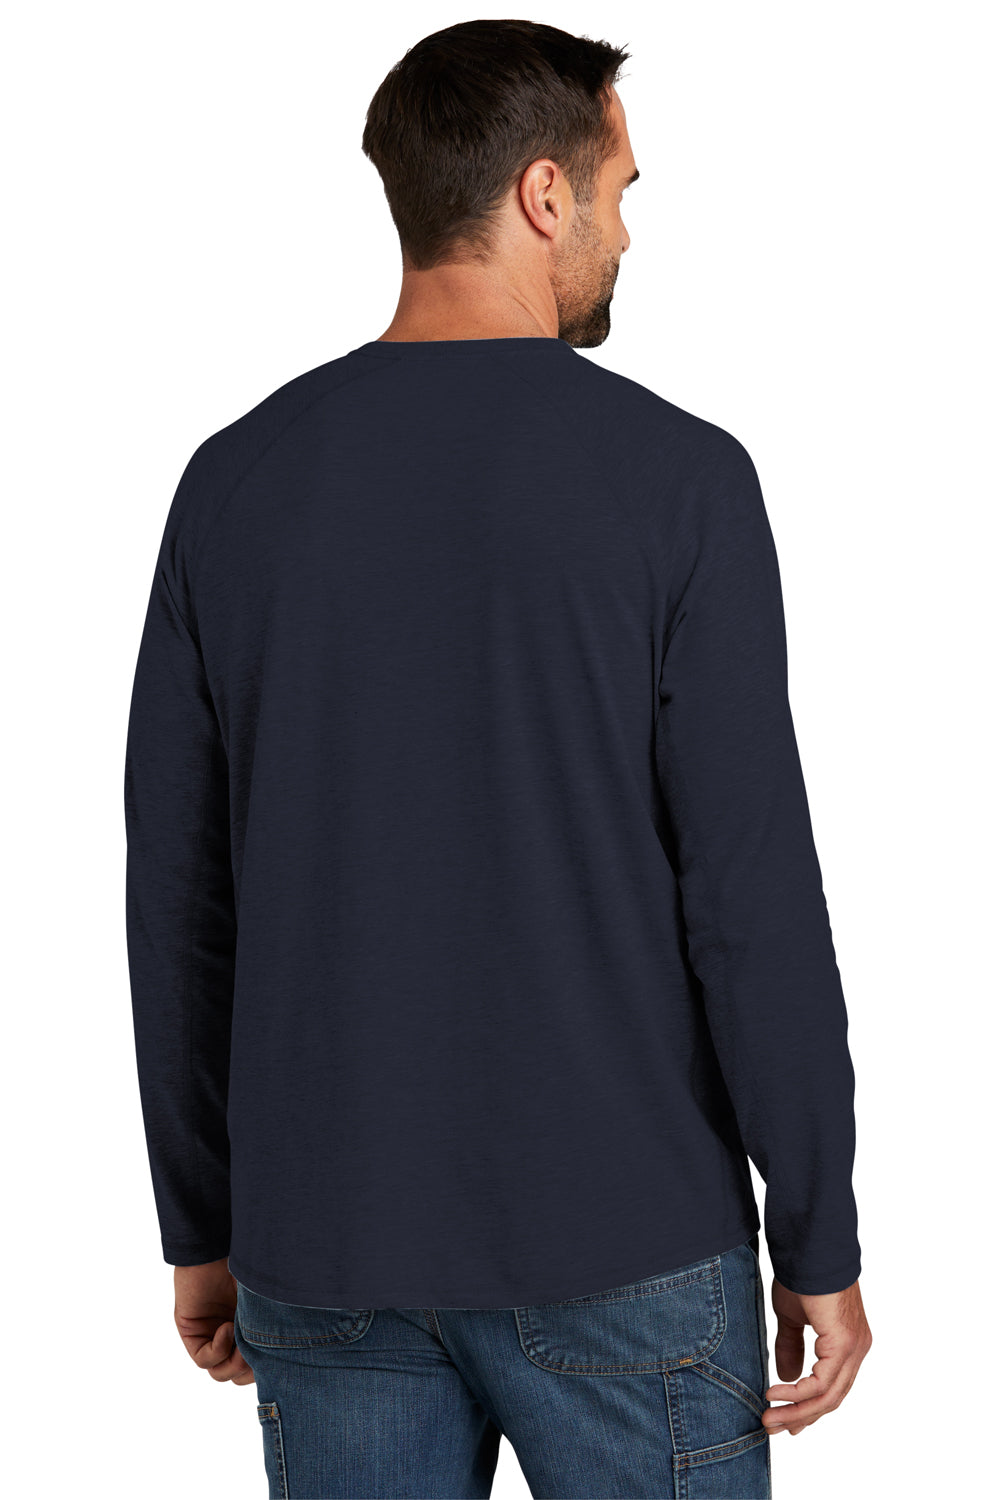 Carhartt CT104617 Mens Force Moisture Wicking Long Sleeve Crewneck T-Shirt w/ Pocket Navy Blue Model Back